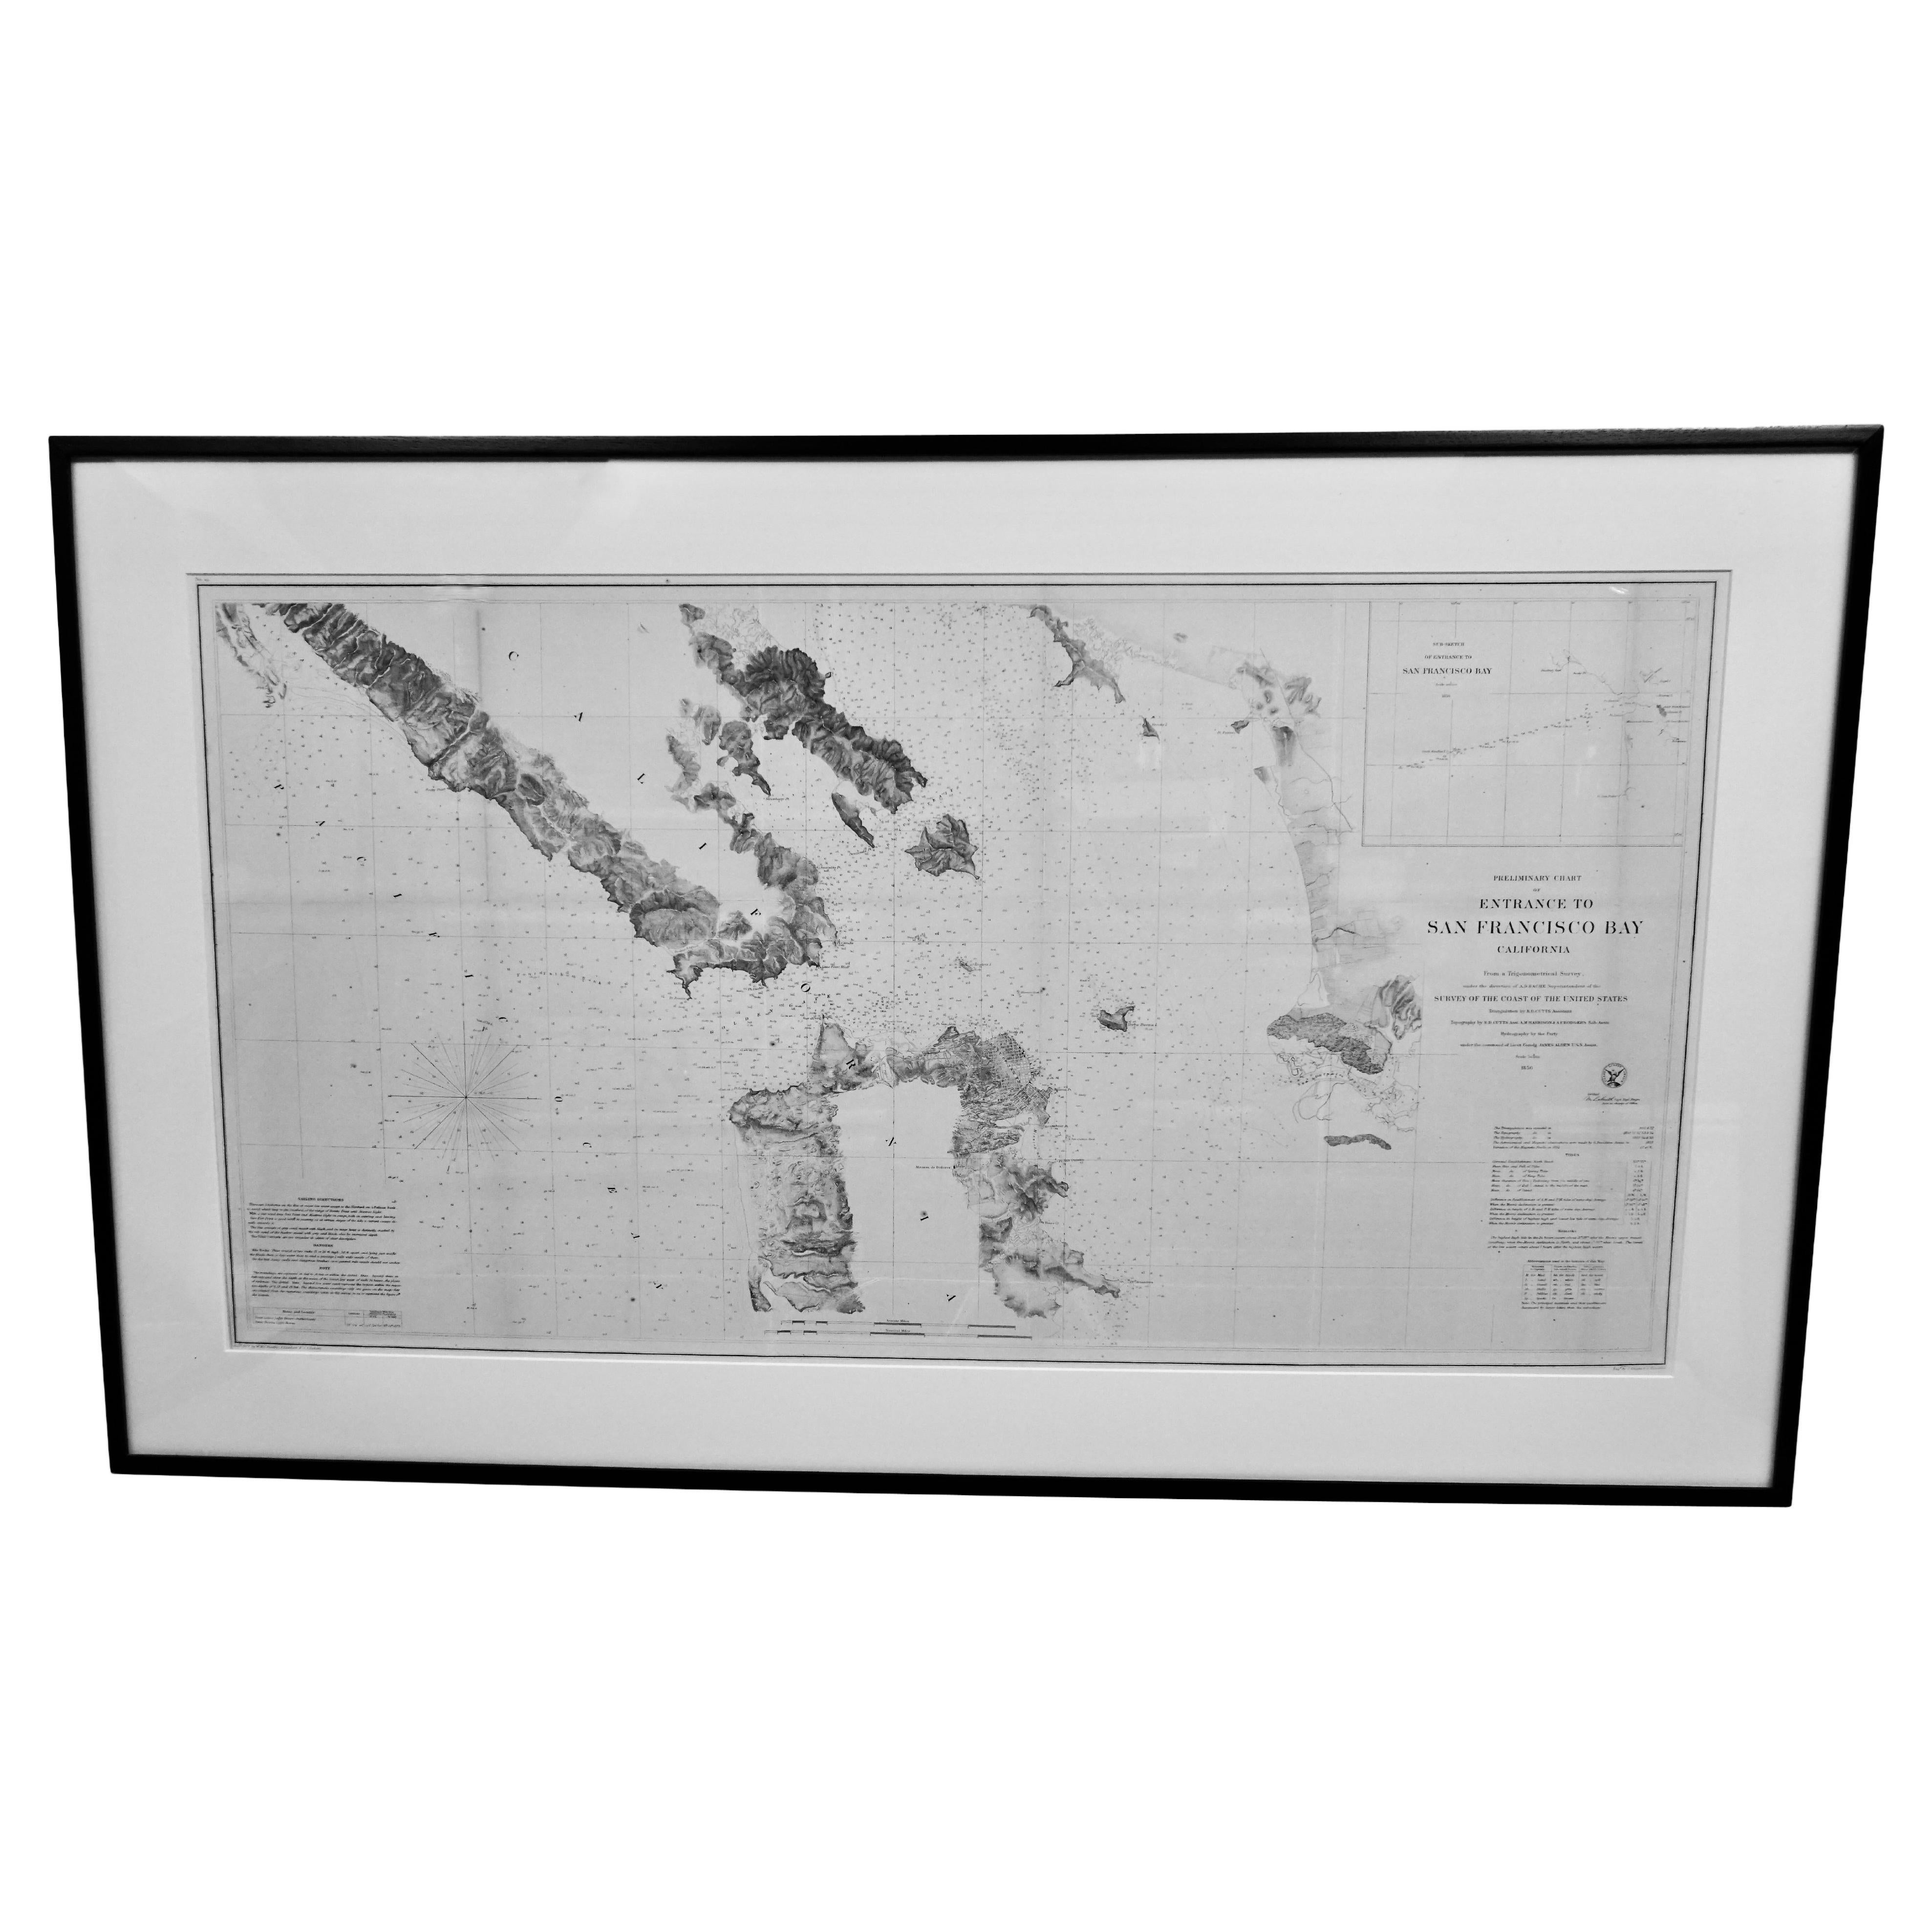 Scarce U.S. Coast Survey Map Depicting Entrance to San Francisco Bay Dated 1856